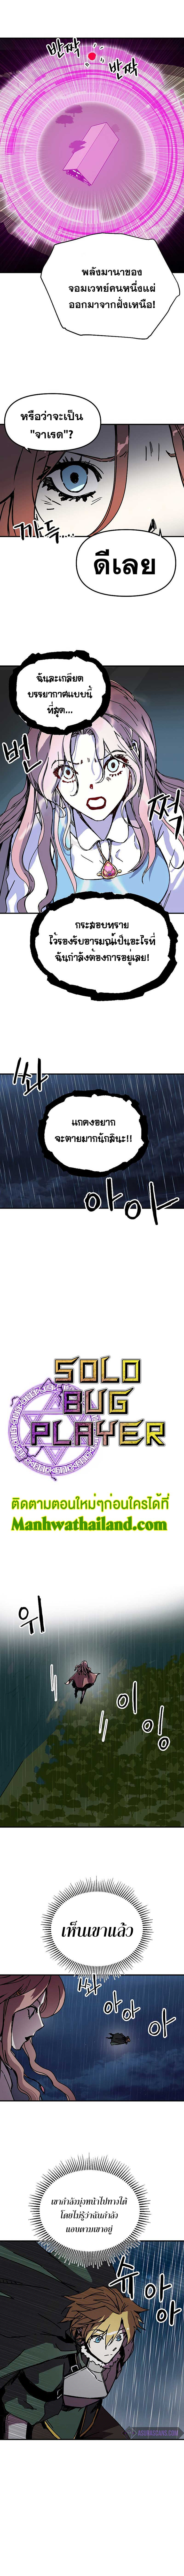 Solo bug player 86 (2)